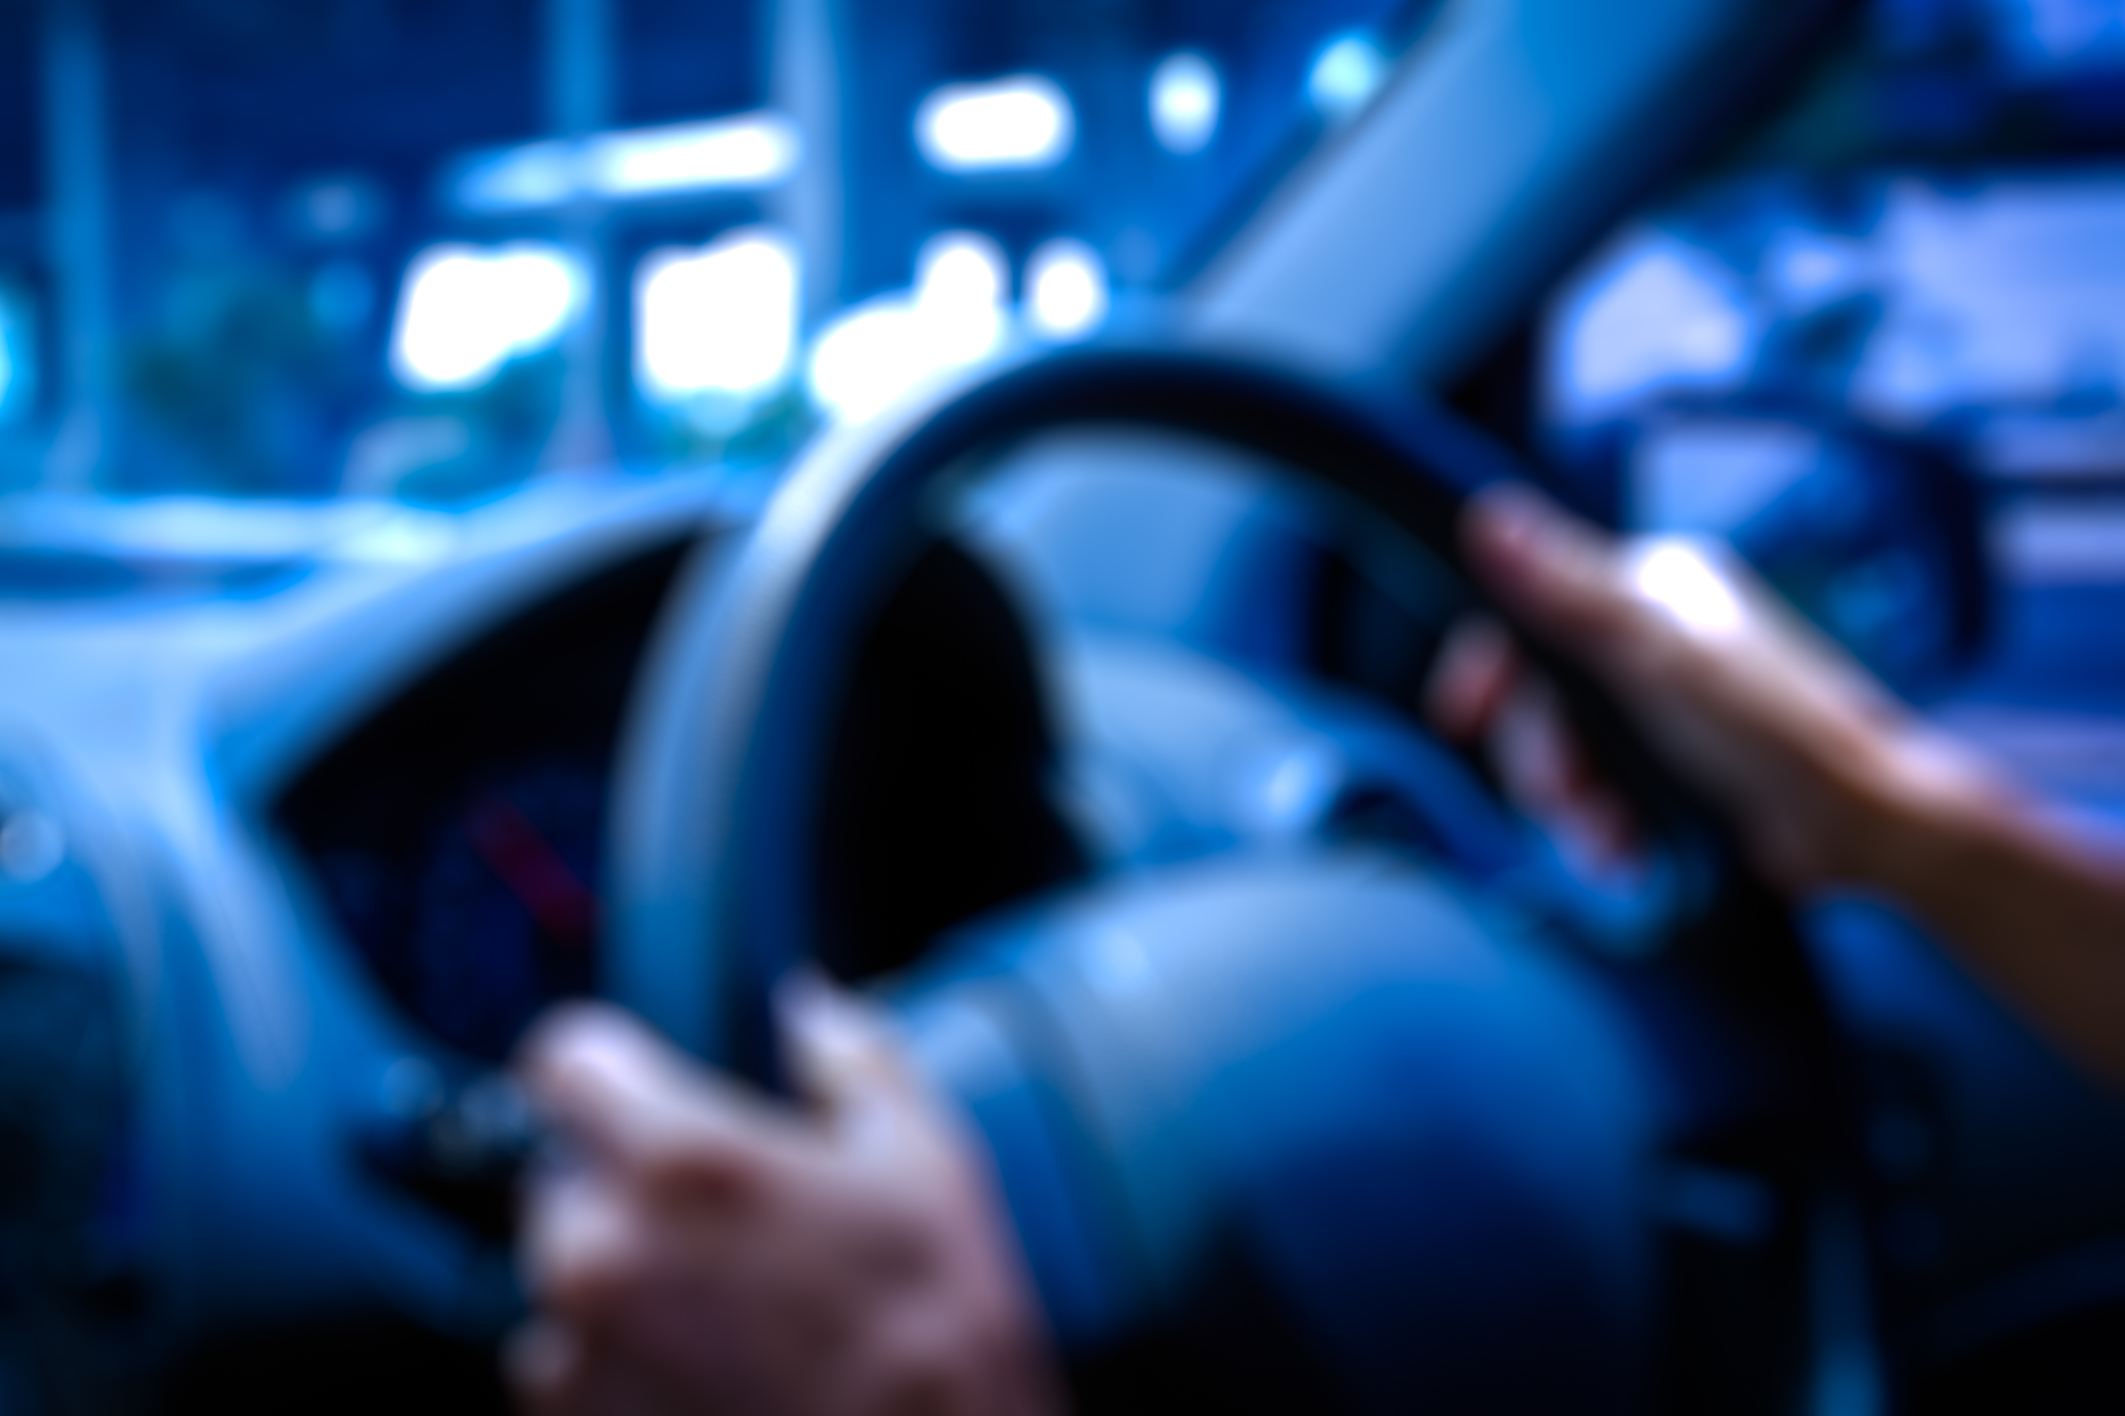 Highway safety advocates urge Maryland to toughen drunken driving laws